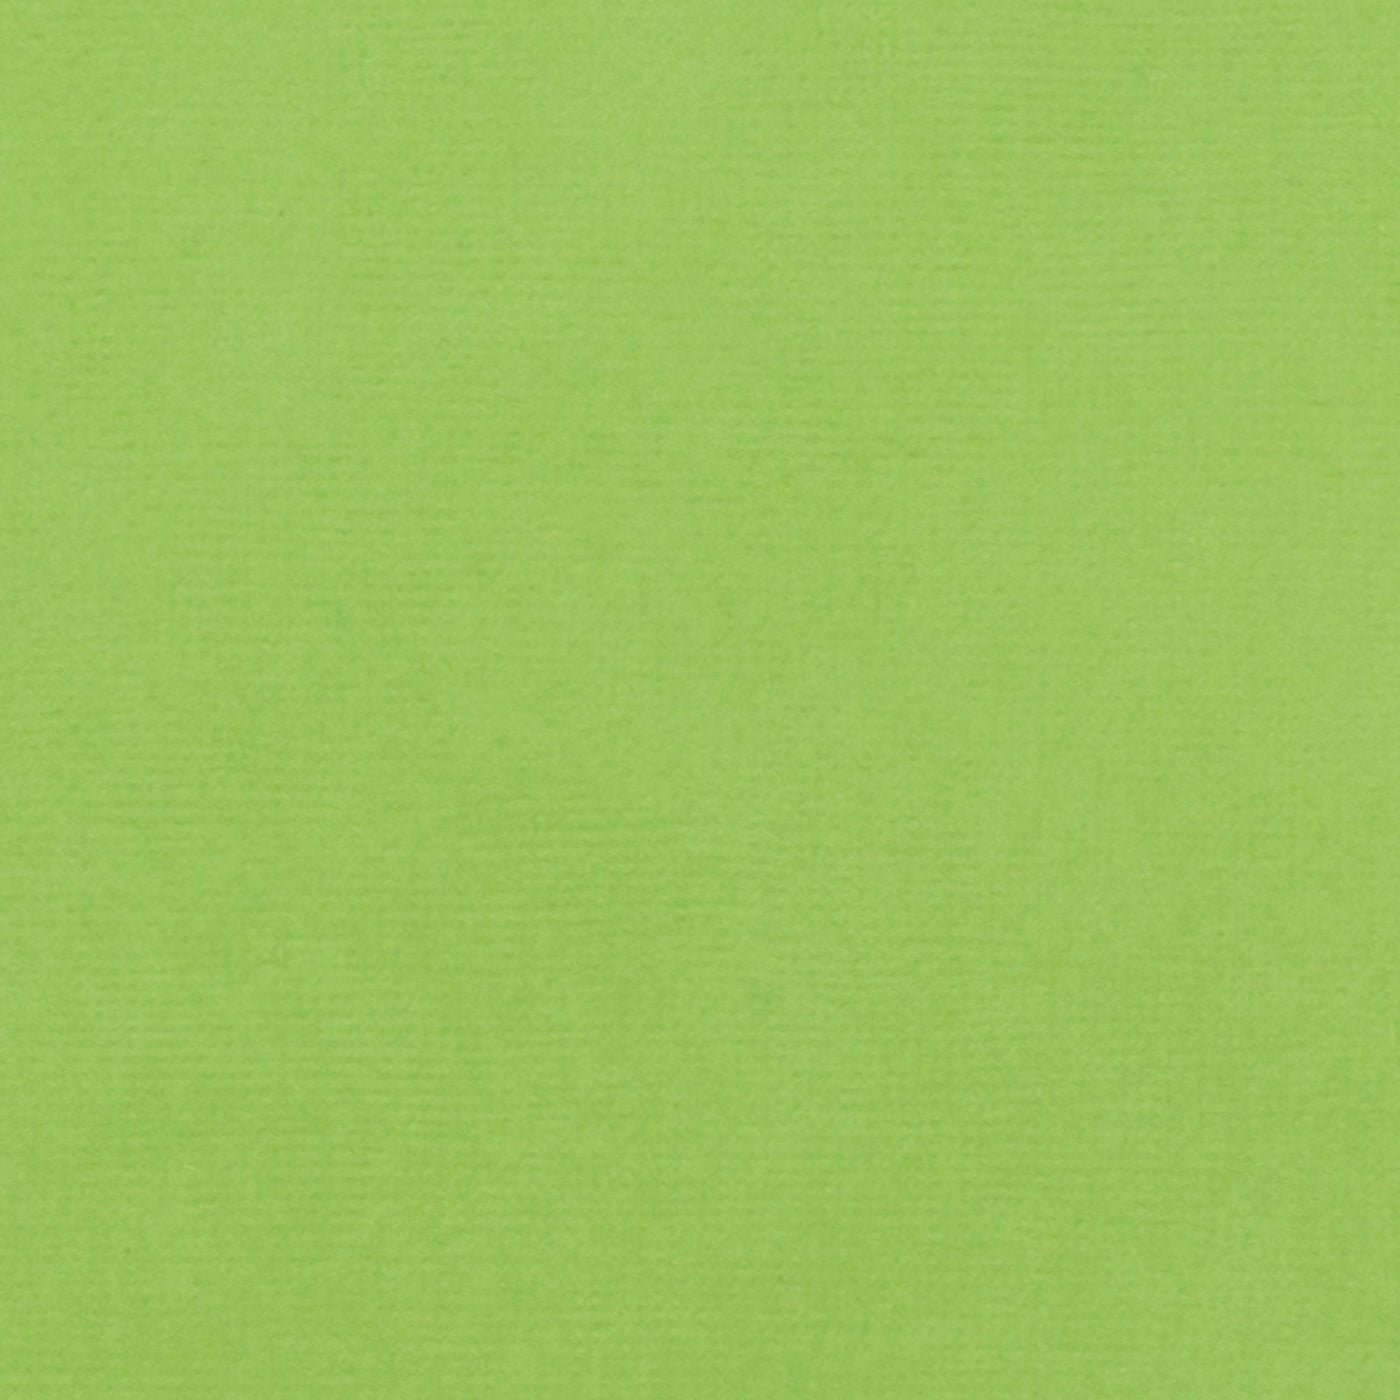 Cricket Green Cardstock - 12x12 inch - 80 lb - textured scrapbook paper - American Crafts